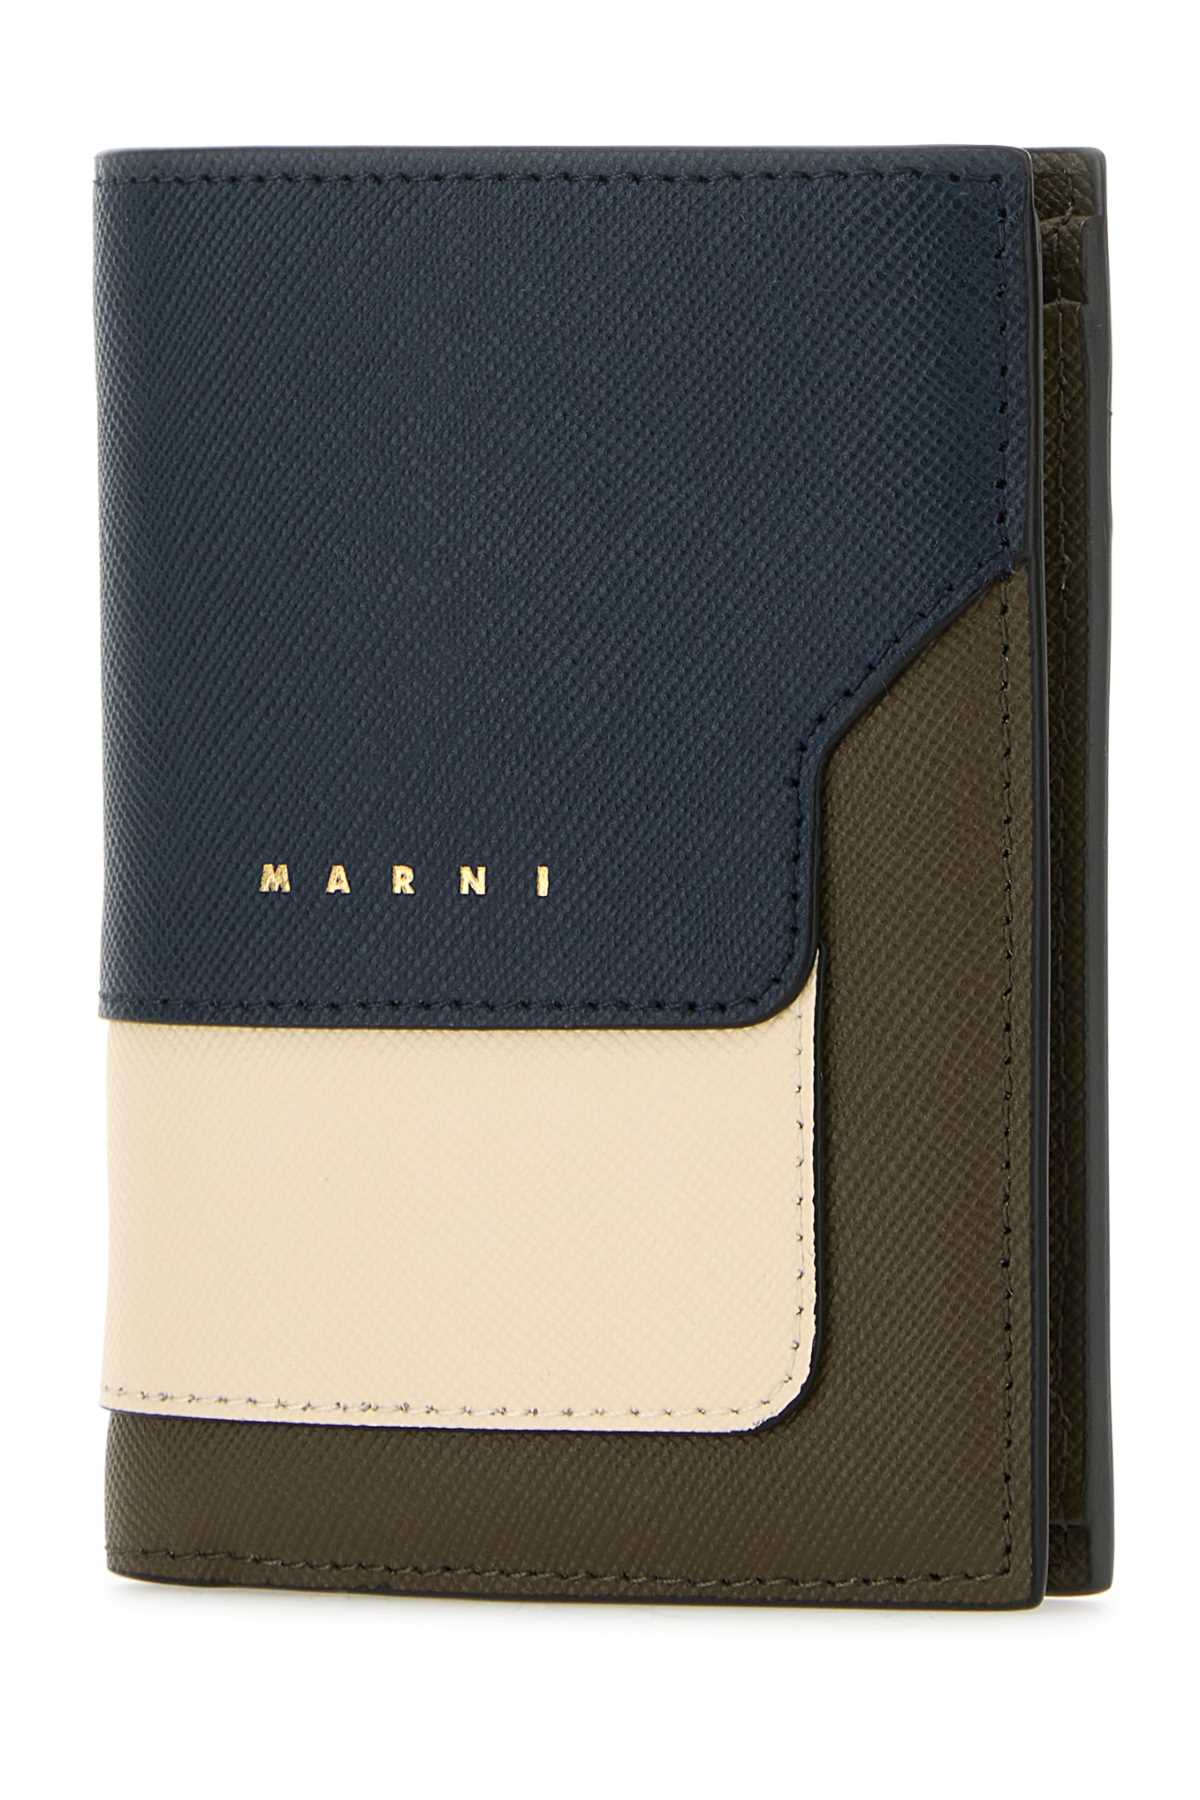 Shop Marni Multicolor Leather Wallet In Nightbluetalcdustyolive